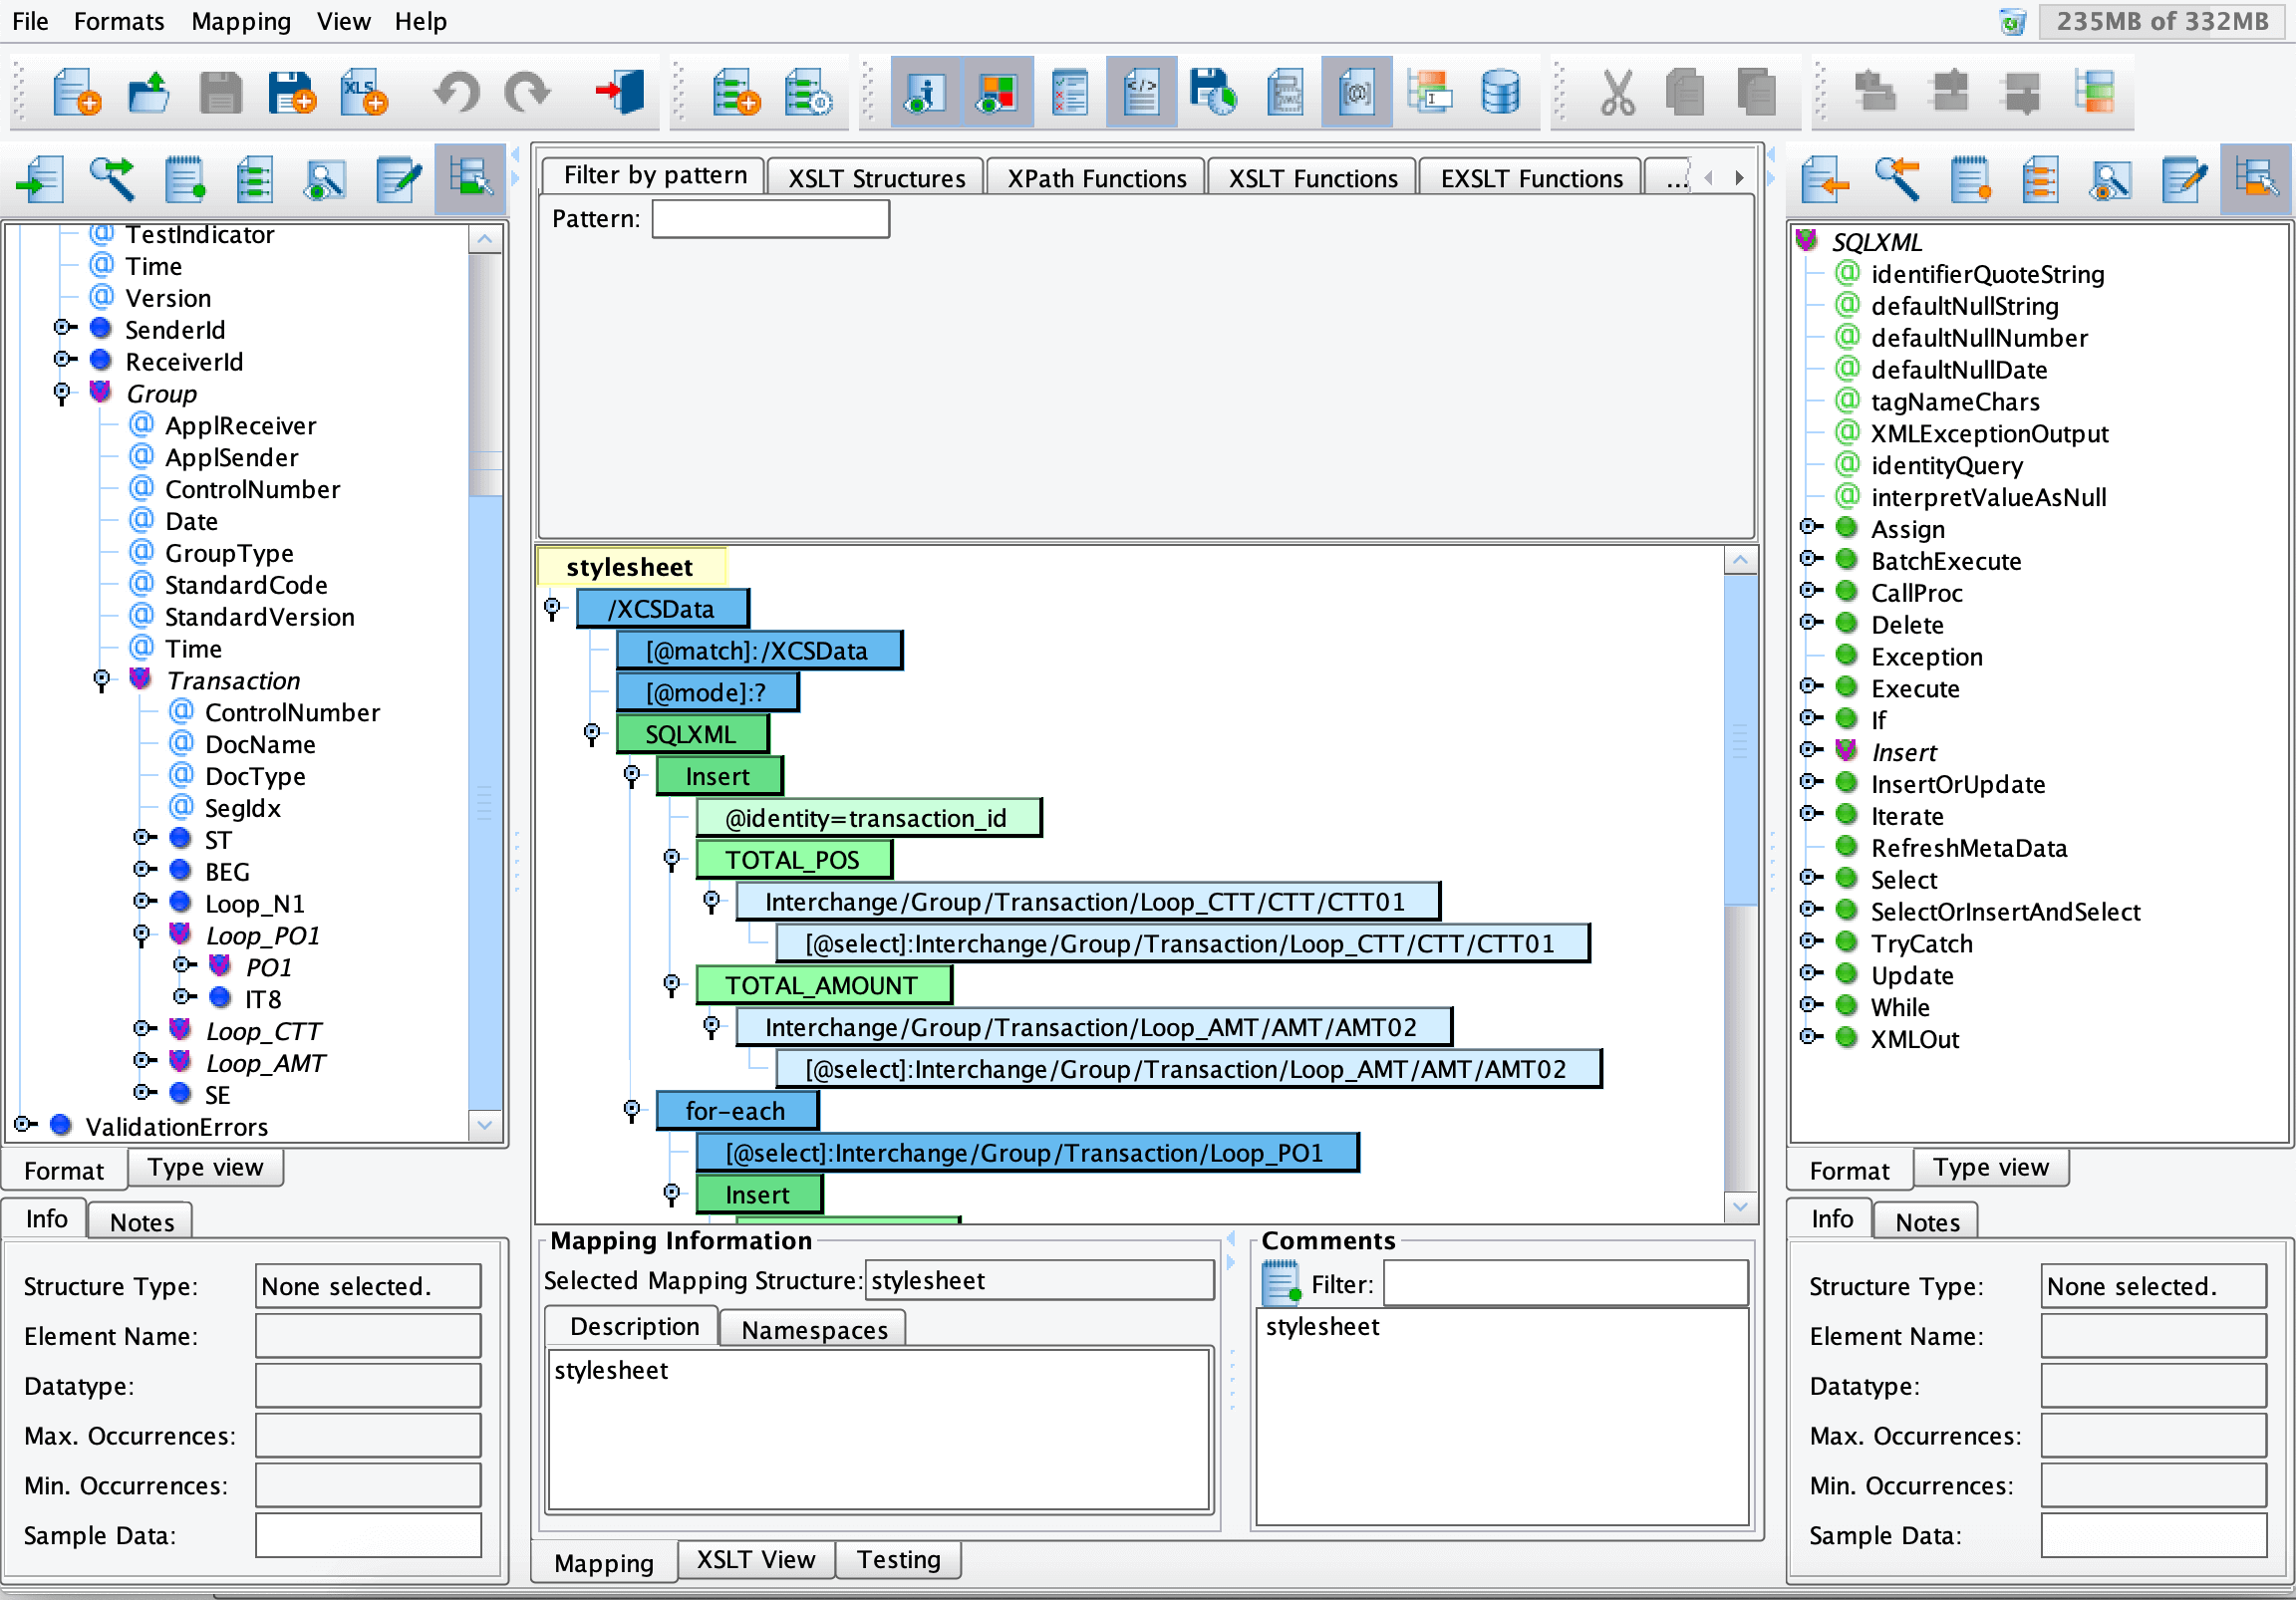 EDI X12 810 transaction example in PilotFish Data Mapper